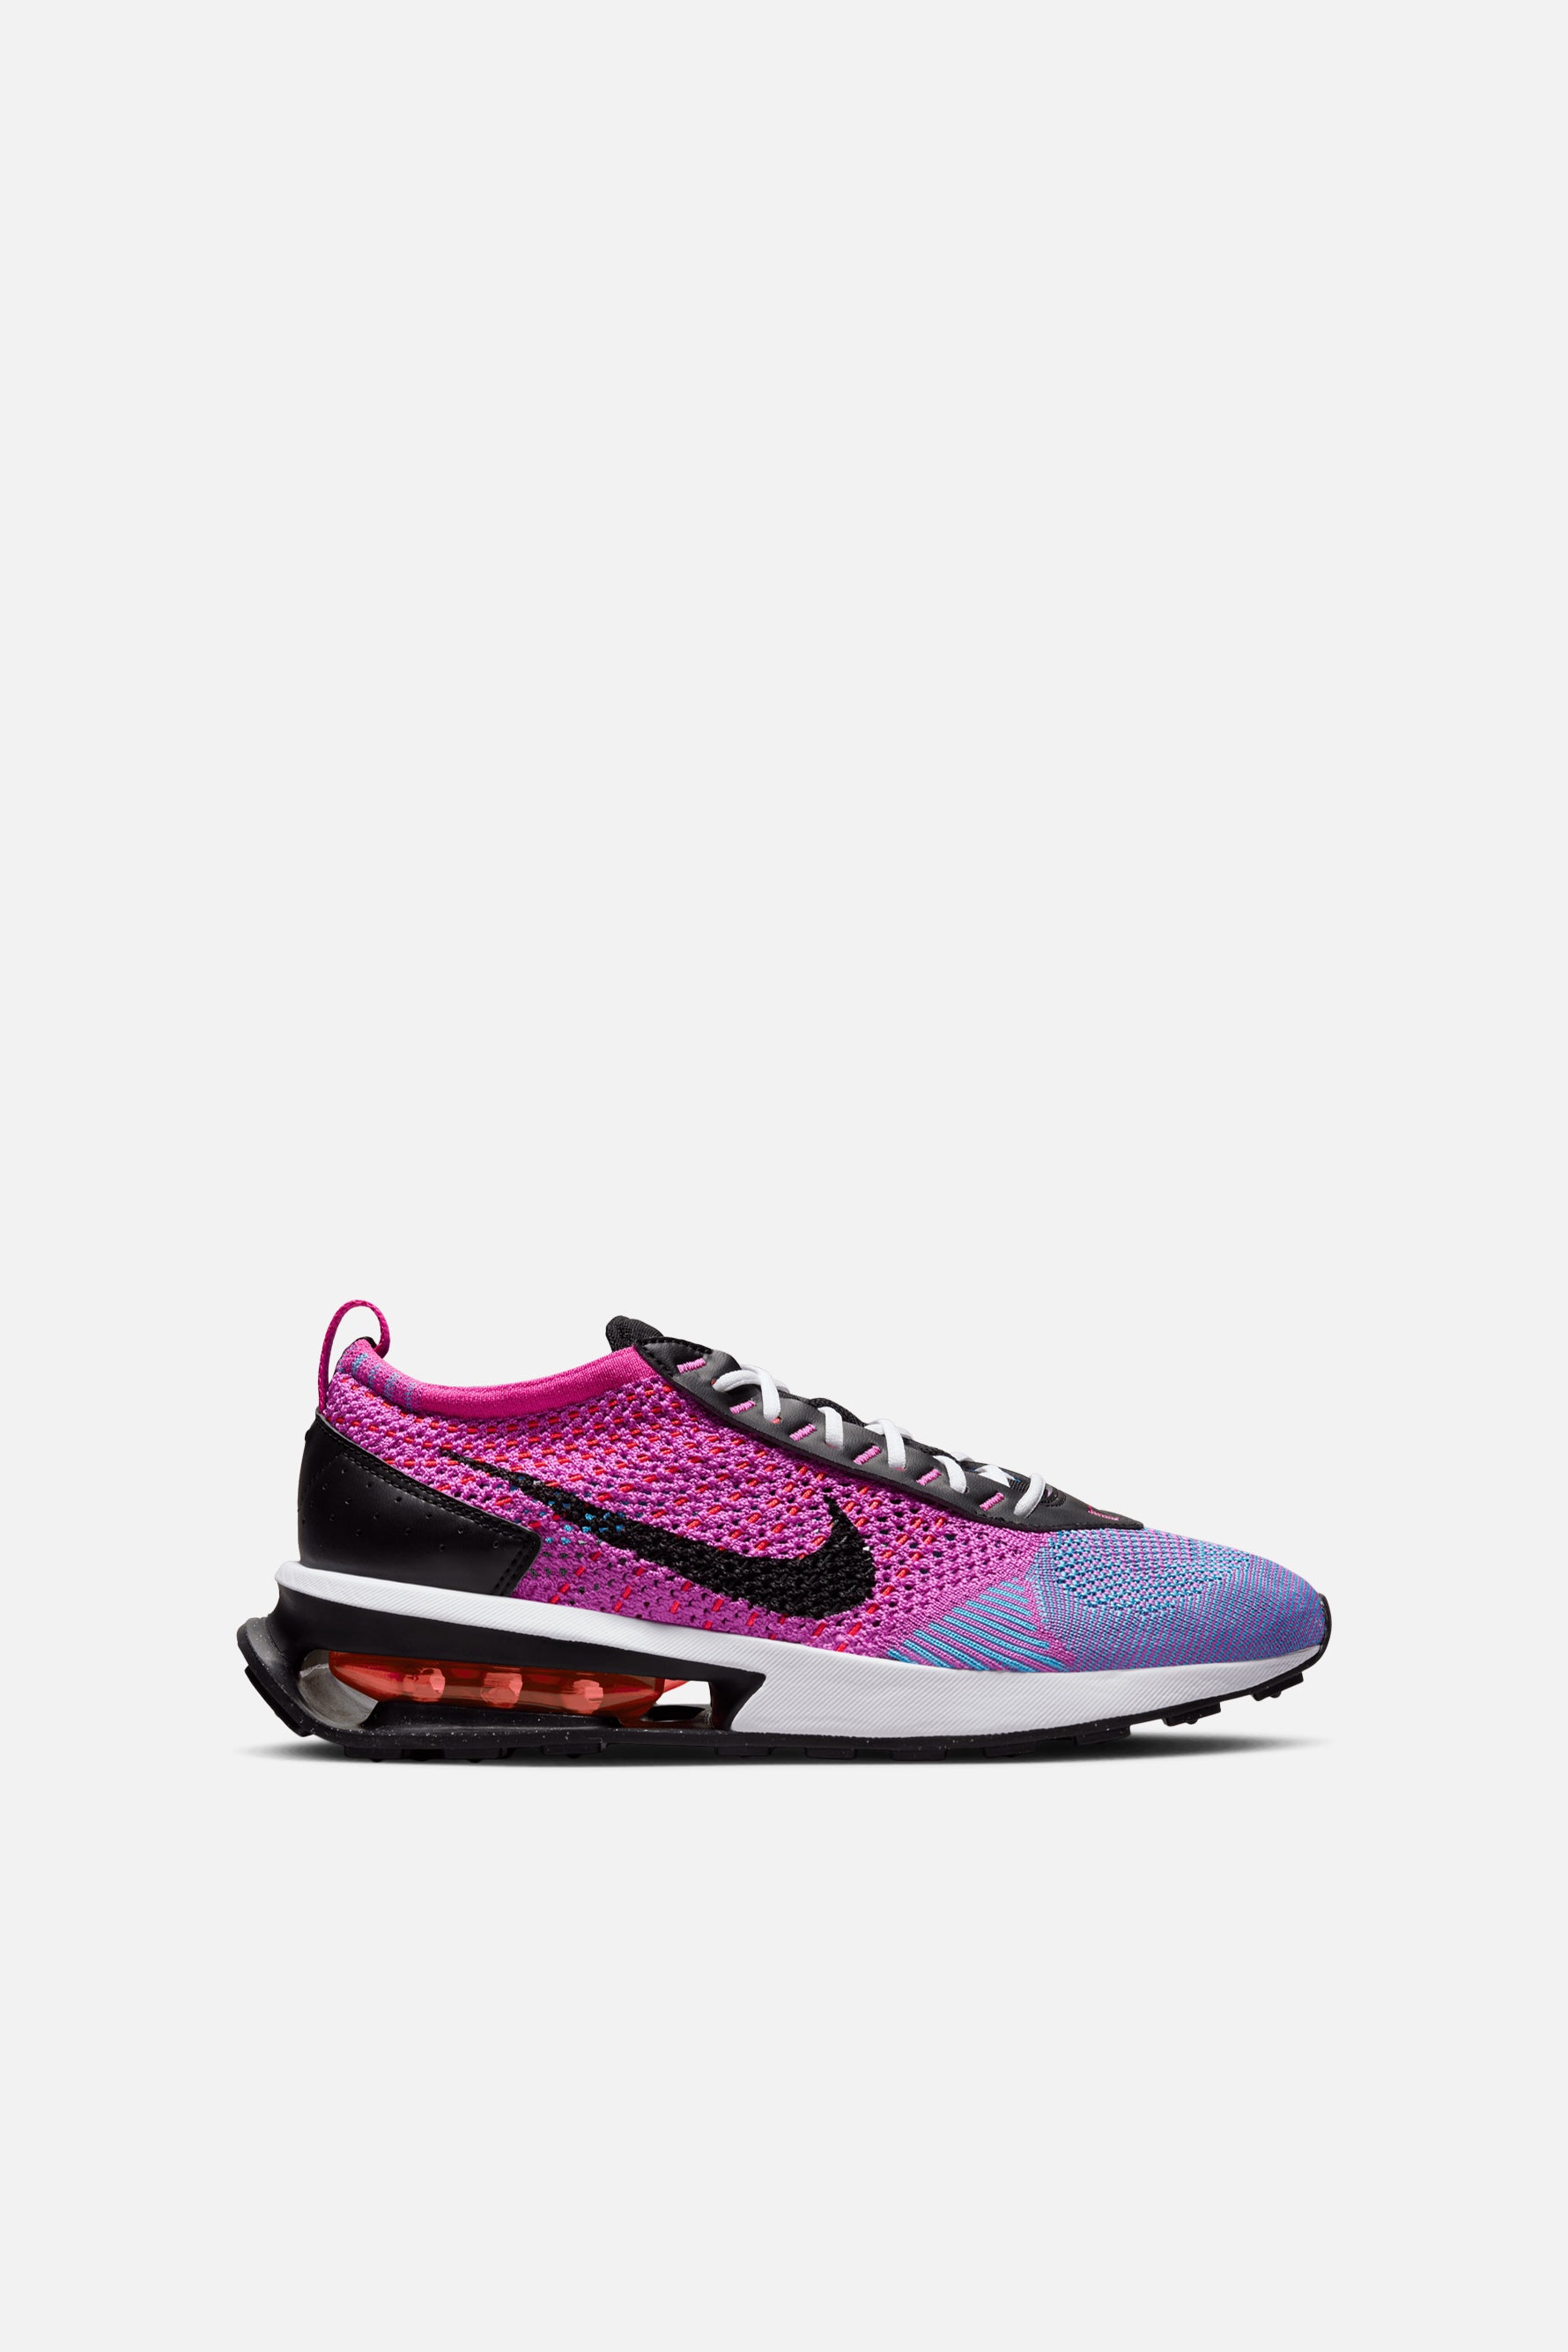 Nike Waffle One Racer Blue/Bright Citron/Hyper Pink Women's Shoe